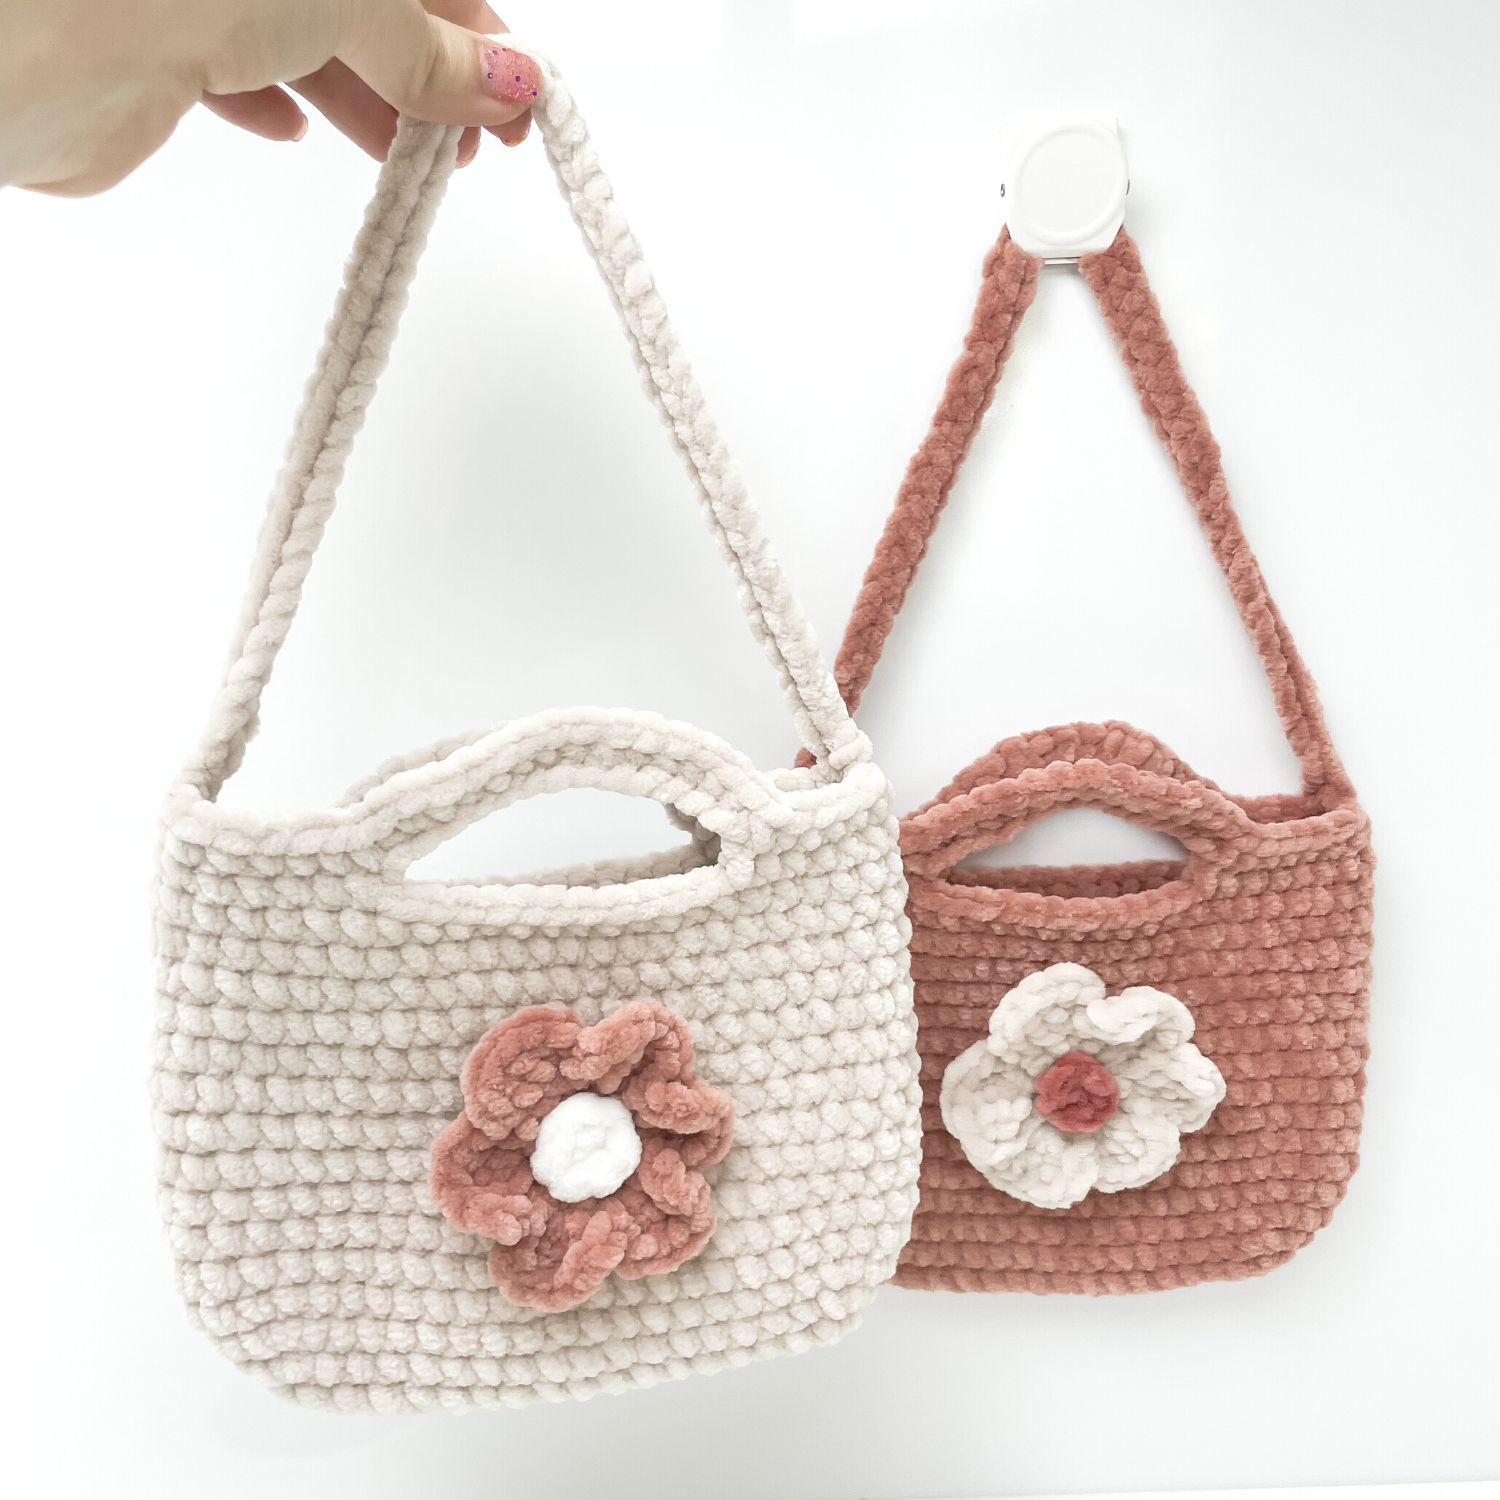 Rose and Lily Amigurumi: Small Crochet Plush Bag - Free Crochet Pattern